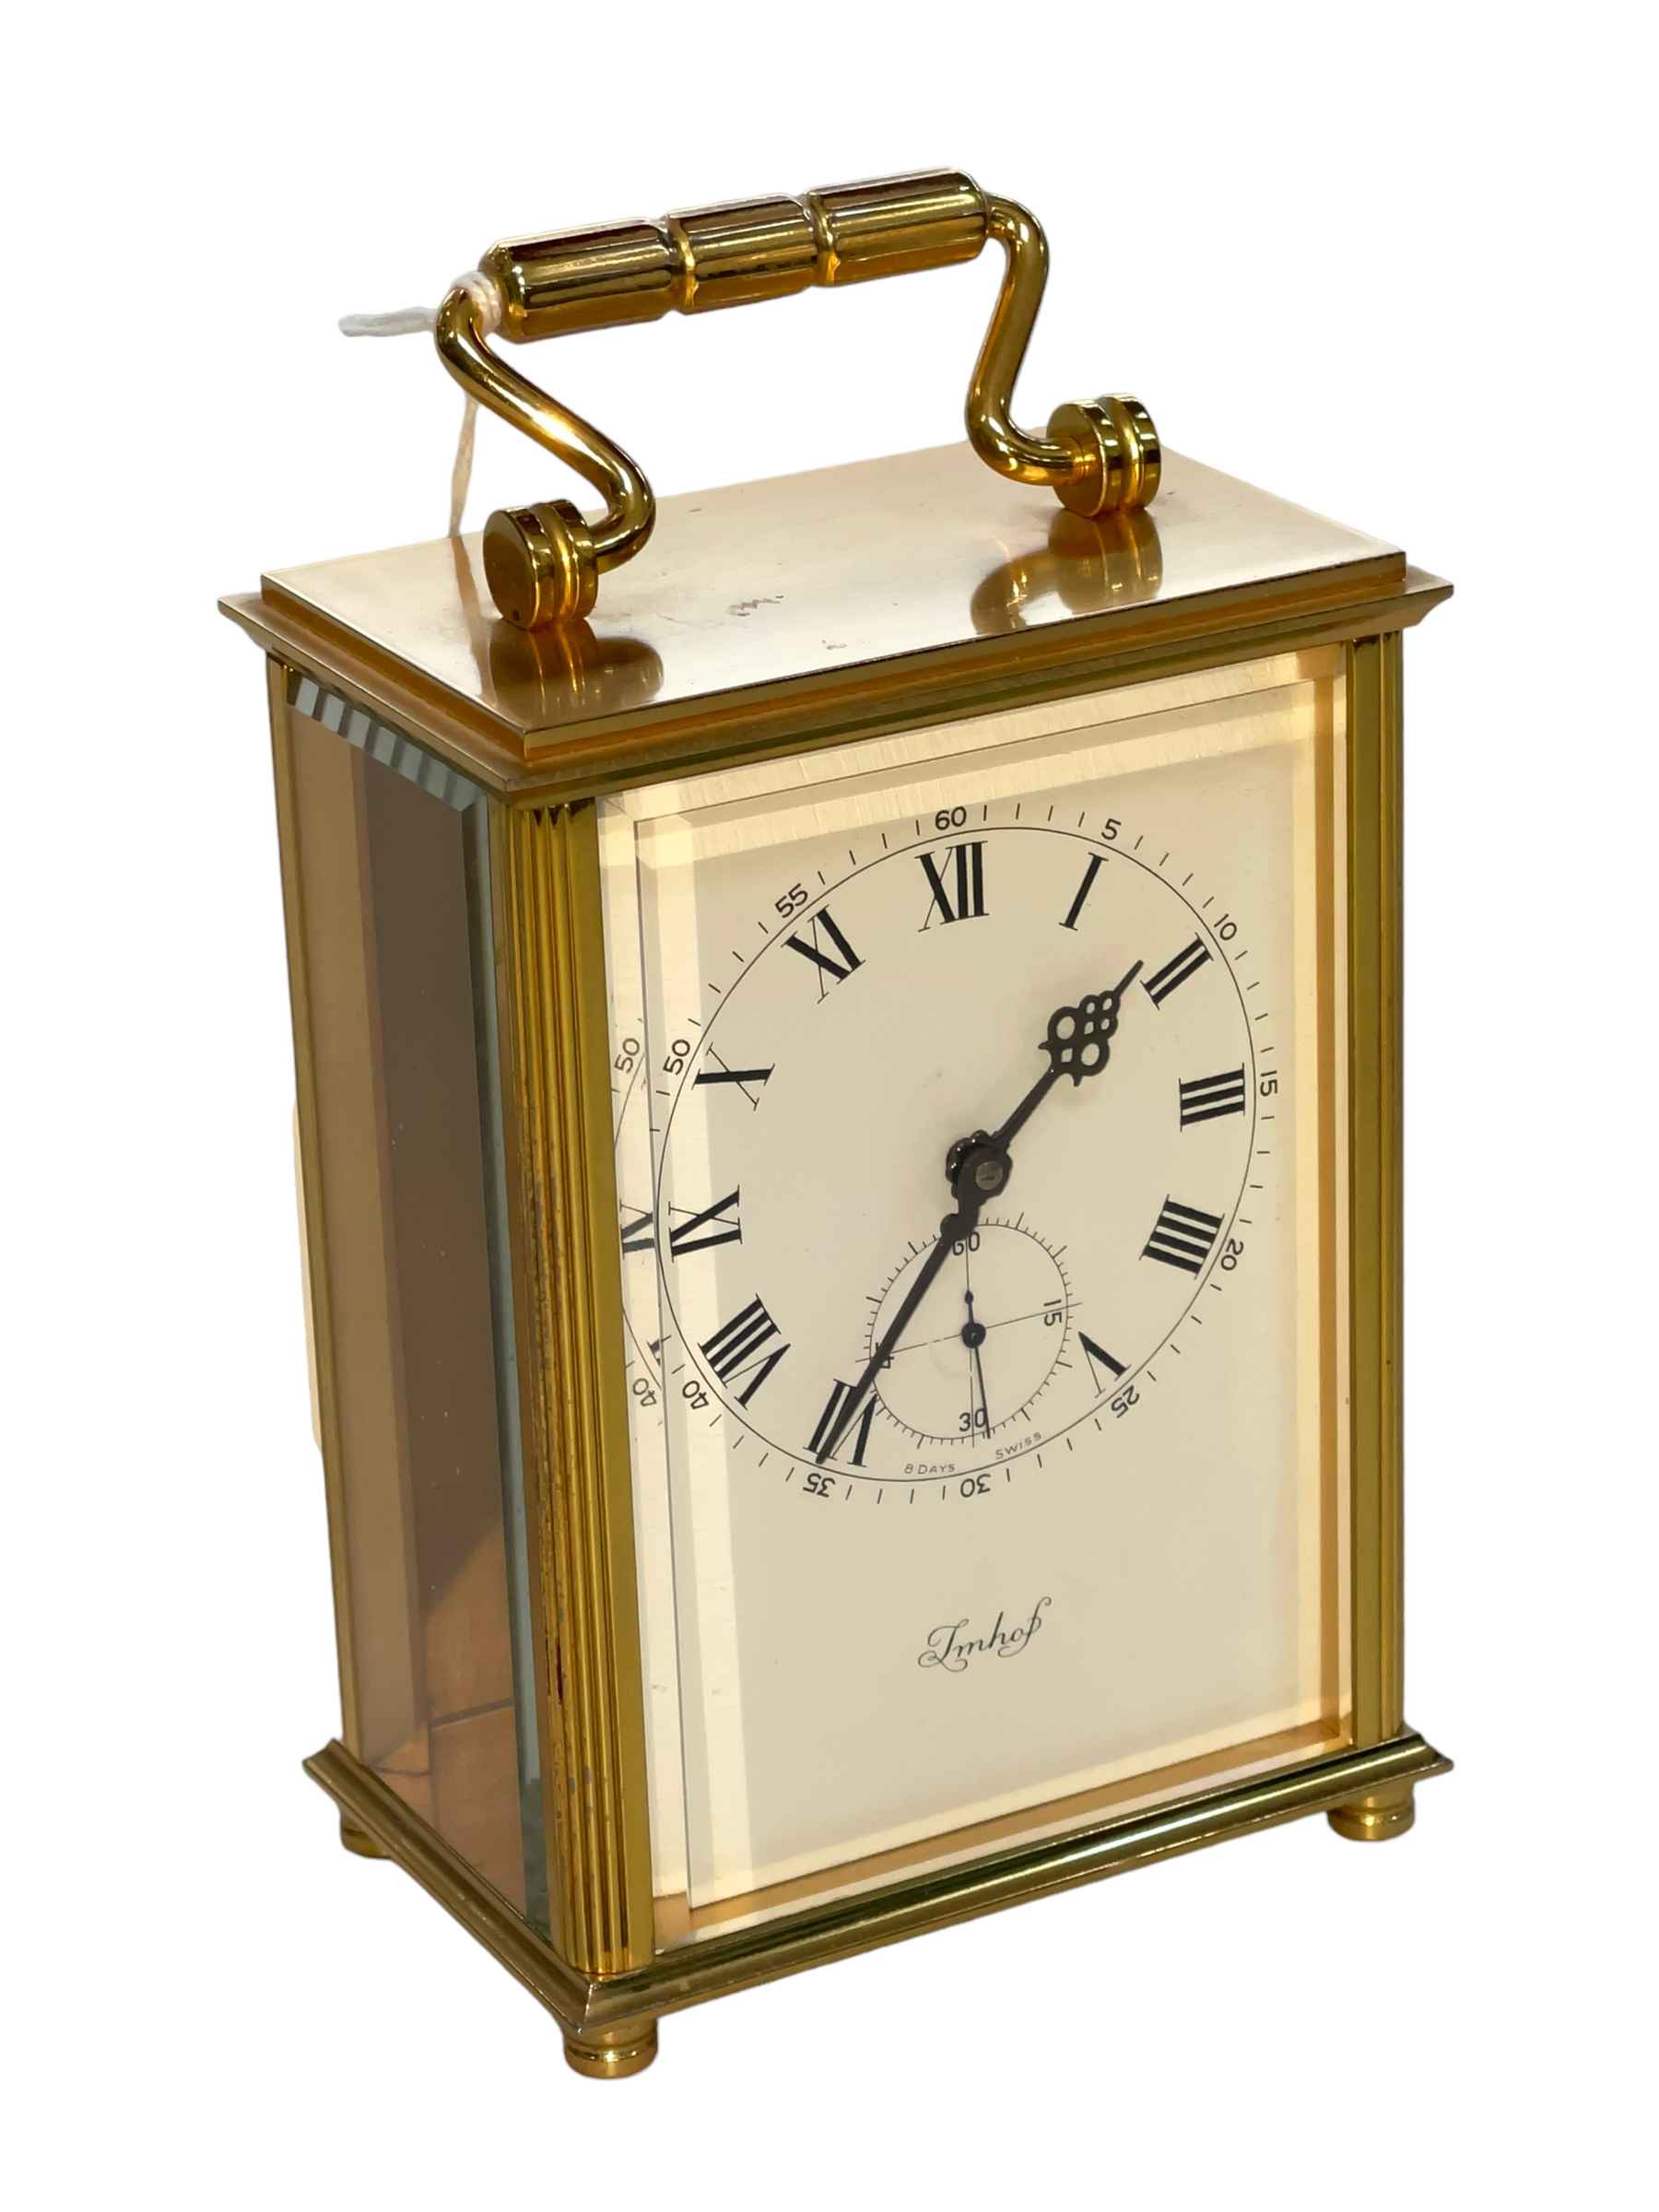 Imhof gilt carriage clock.